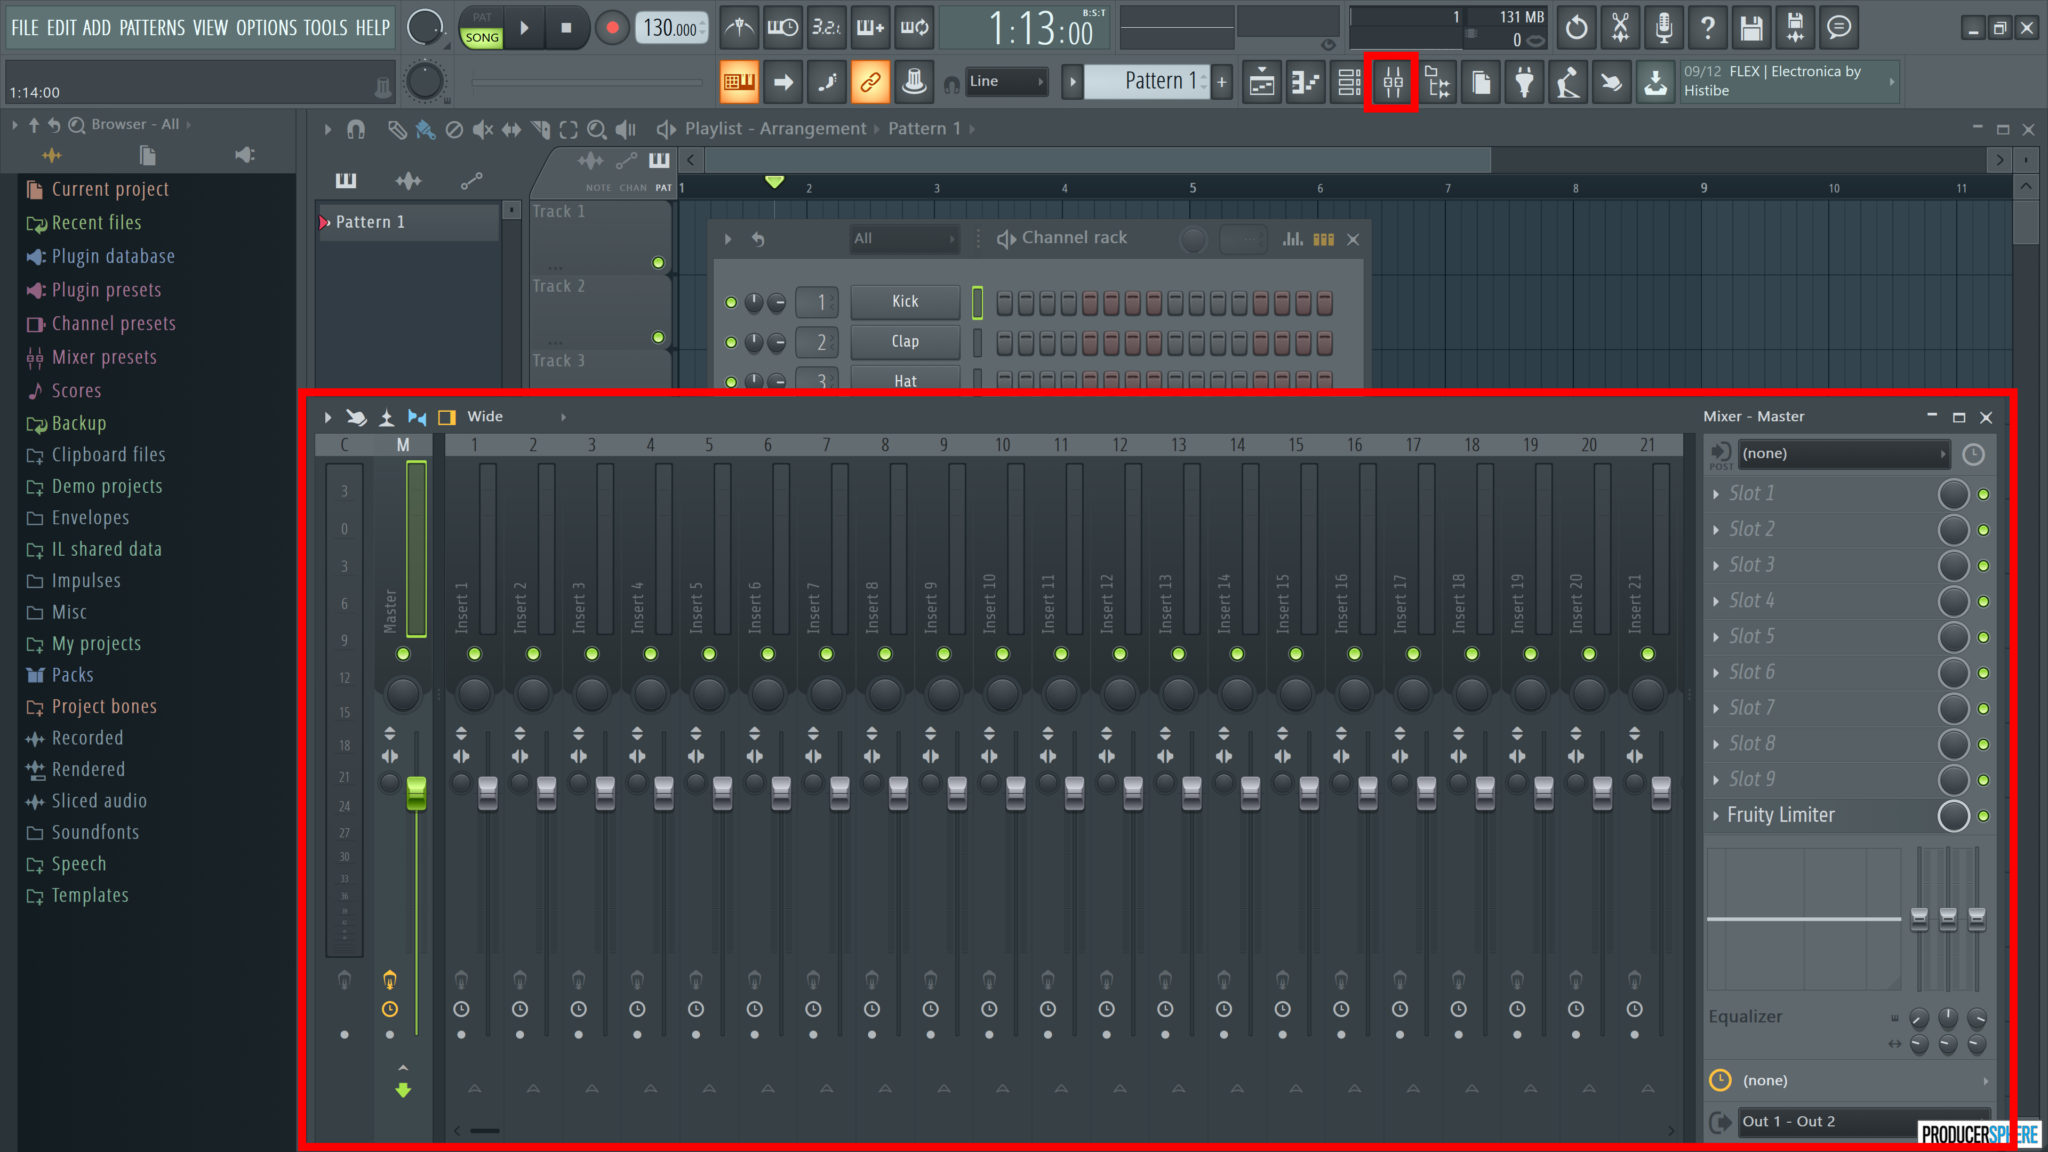 Soundfont fl studio. Step Sequencer в FL Studio. Секвенсор FL Studio. Сэмплы для фл студио. Channel Rack FL Studio.